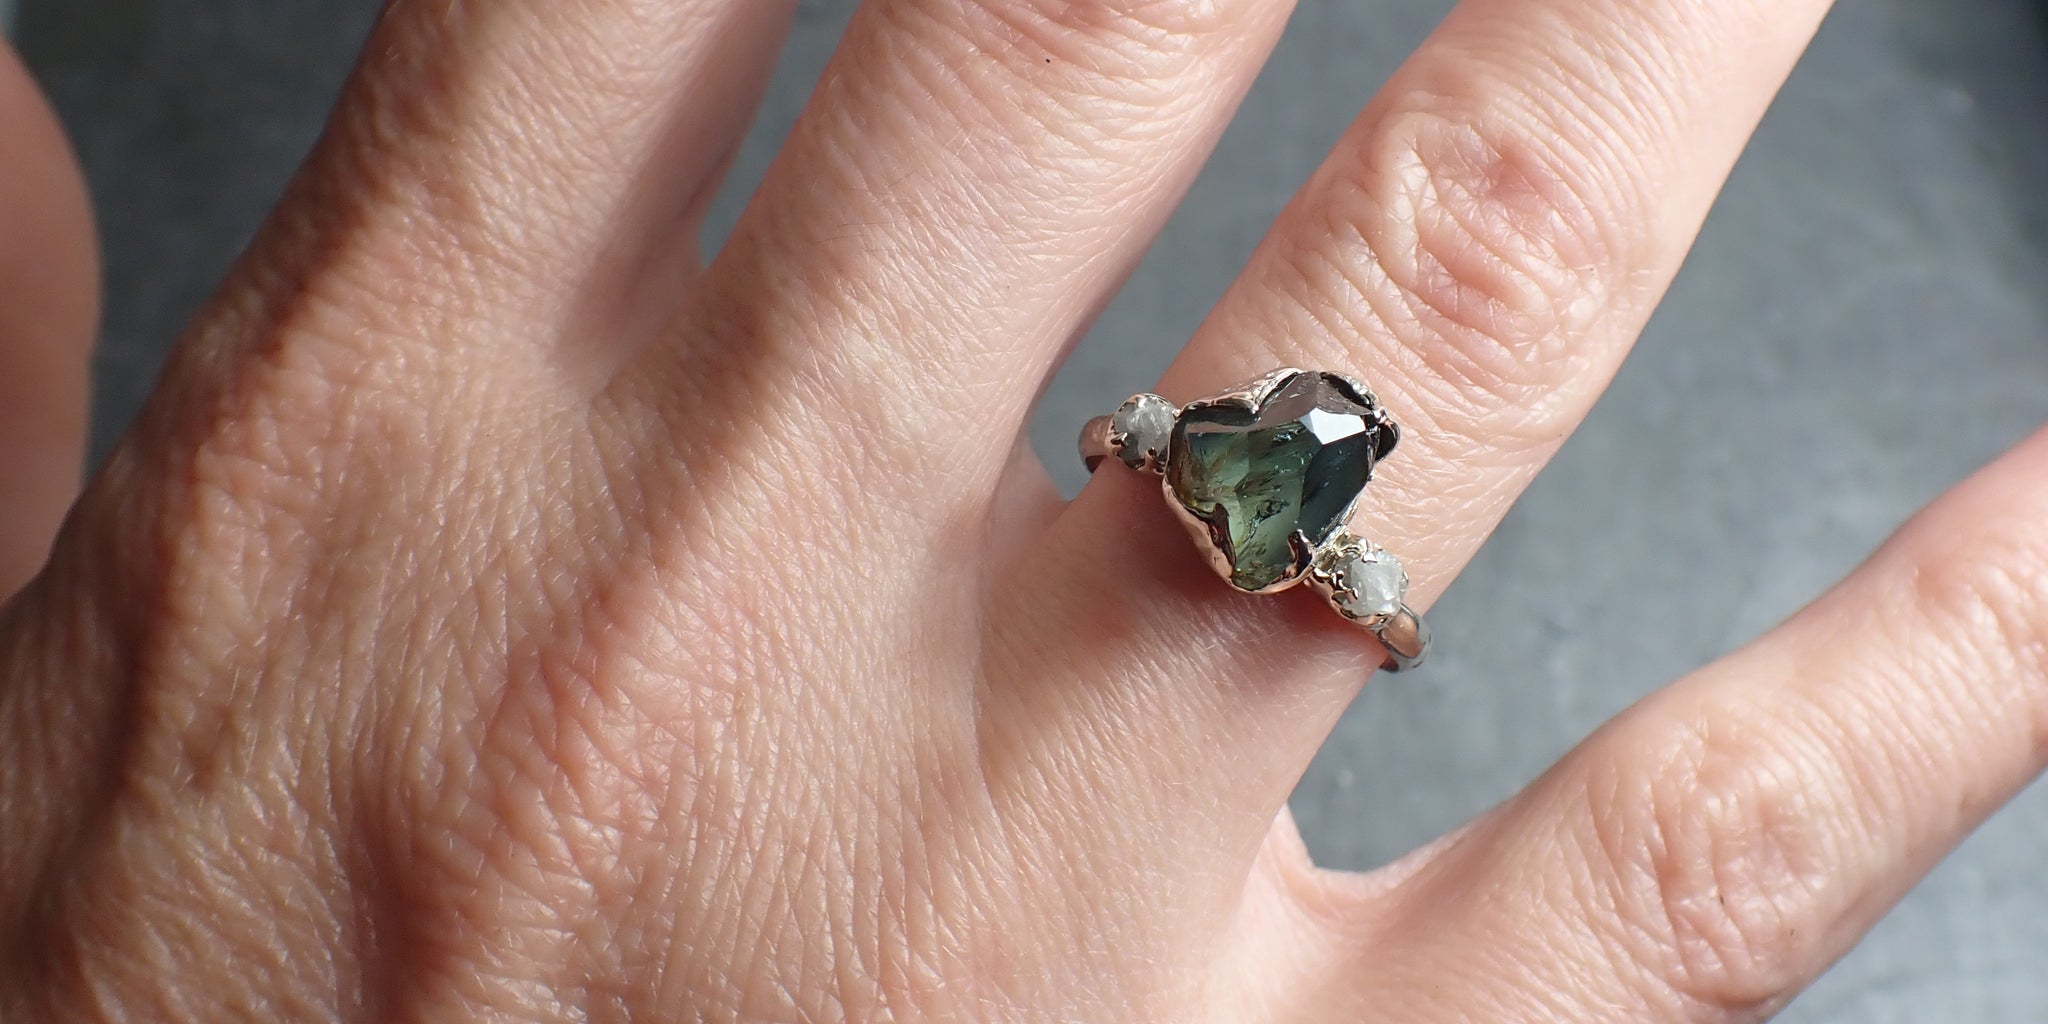 montana sapphire partially faceted multi stone rough diamond 14k white gold engagement ring wedding ring custom gemstone ring 2303 Alternative Engagement